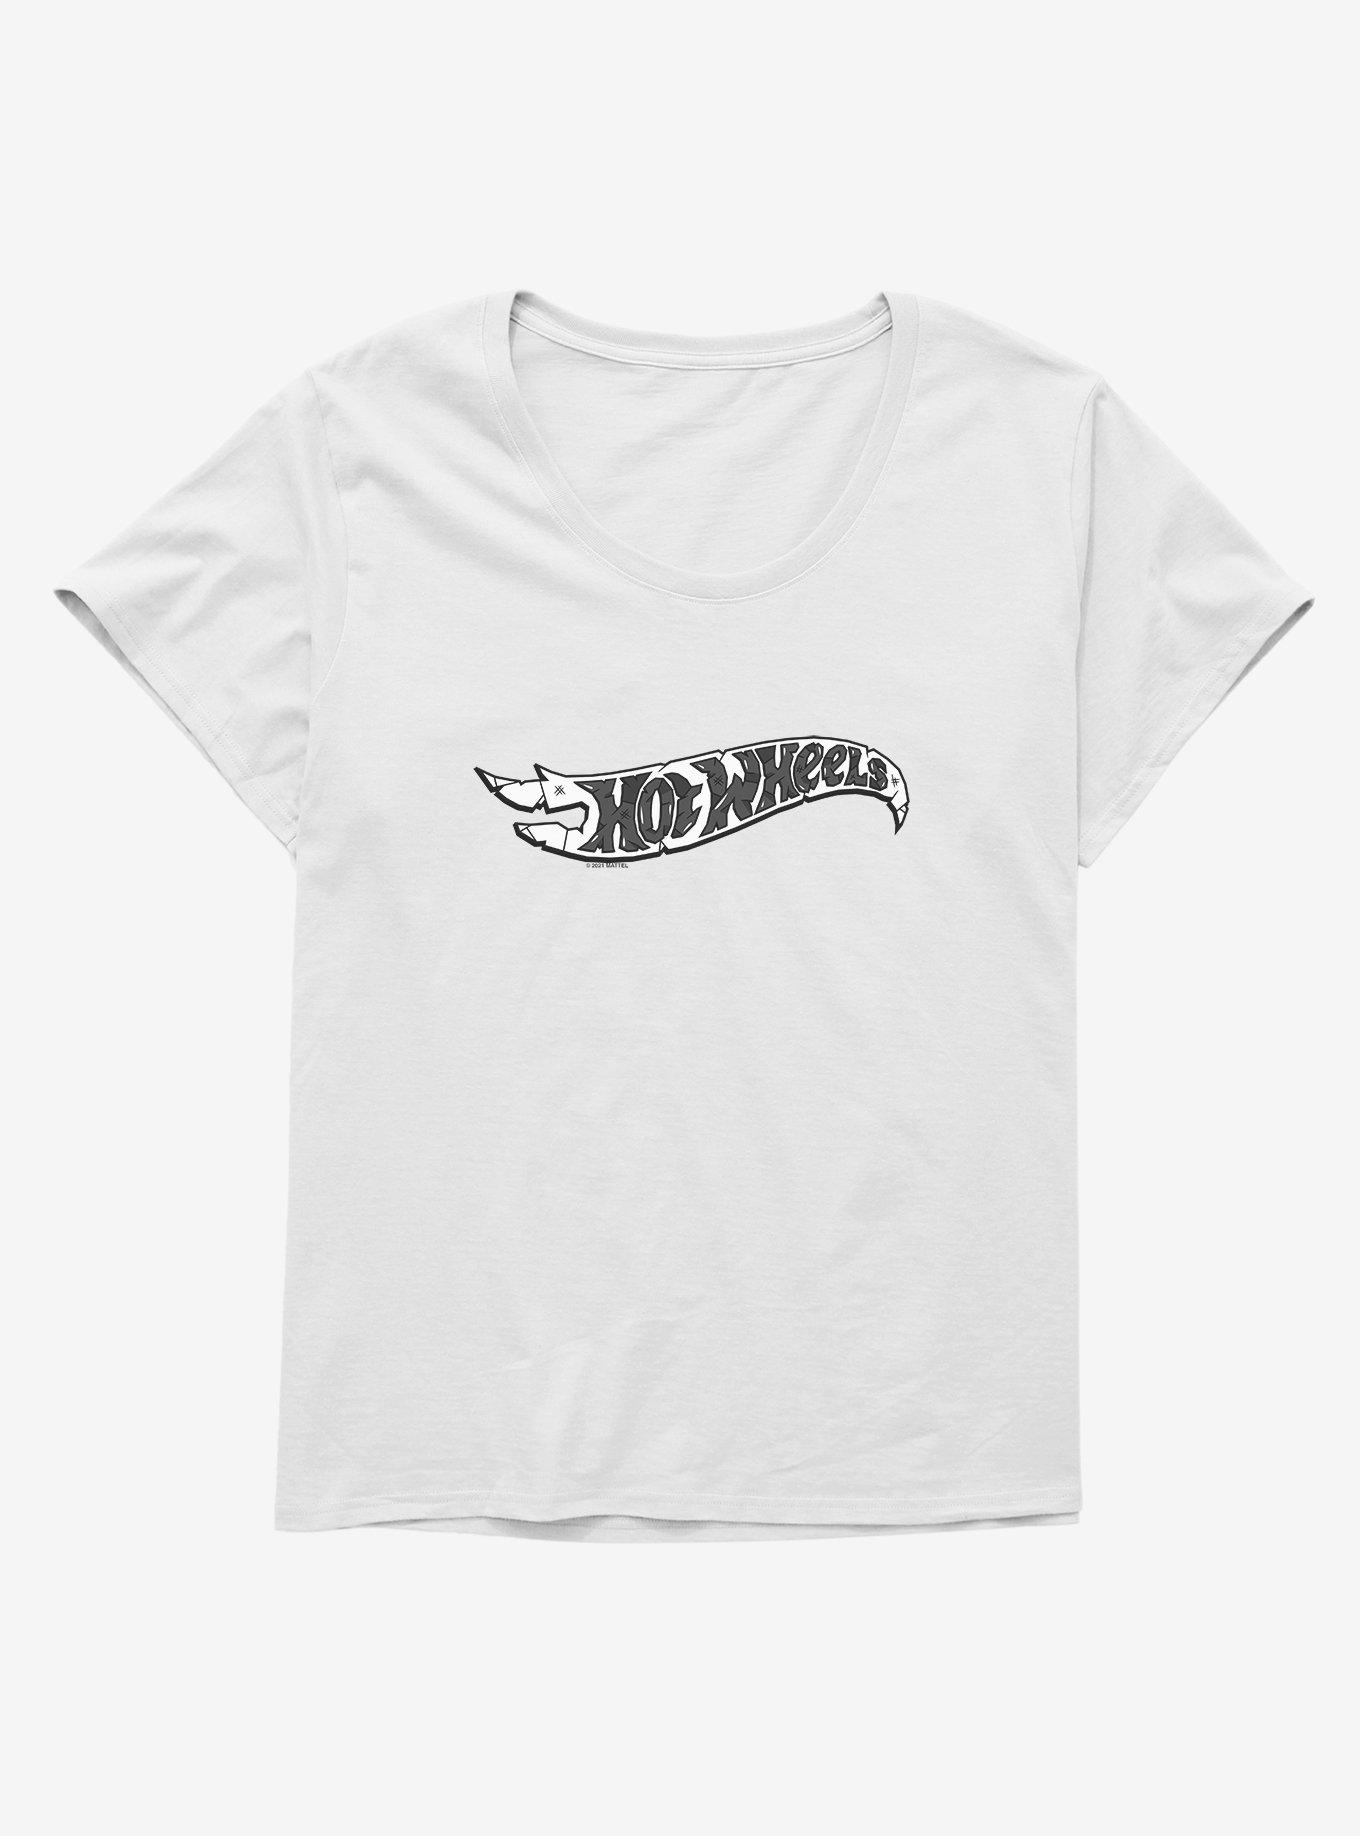 Hot Wheels Tattered Logo Girls T-Shirt Plus Size, WHITE, hi-res